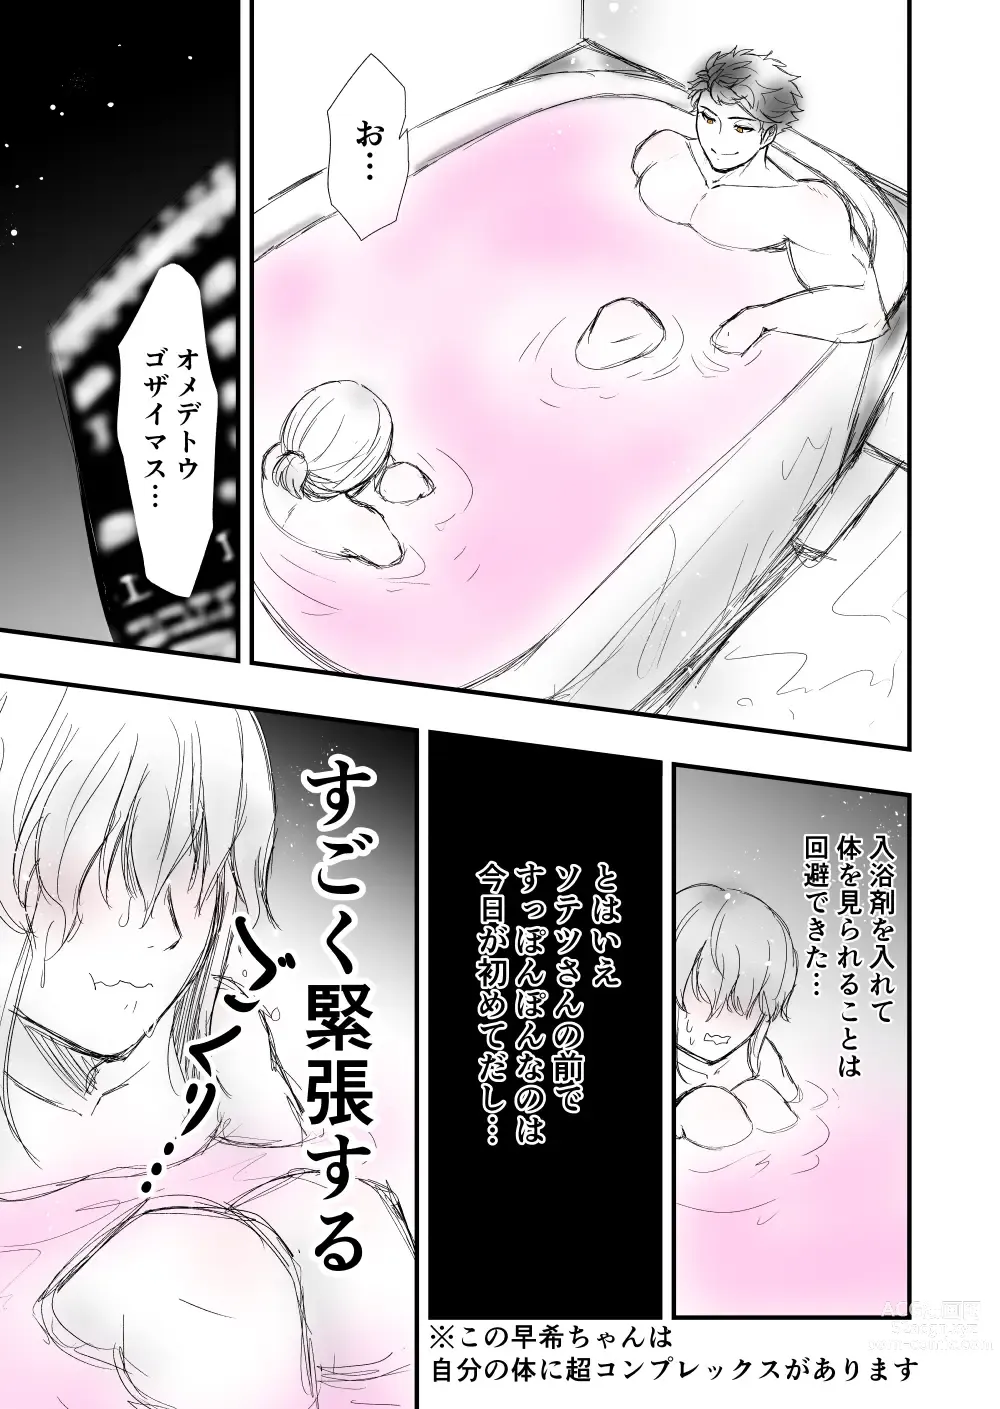 Page 7 of doujinshi 3